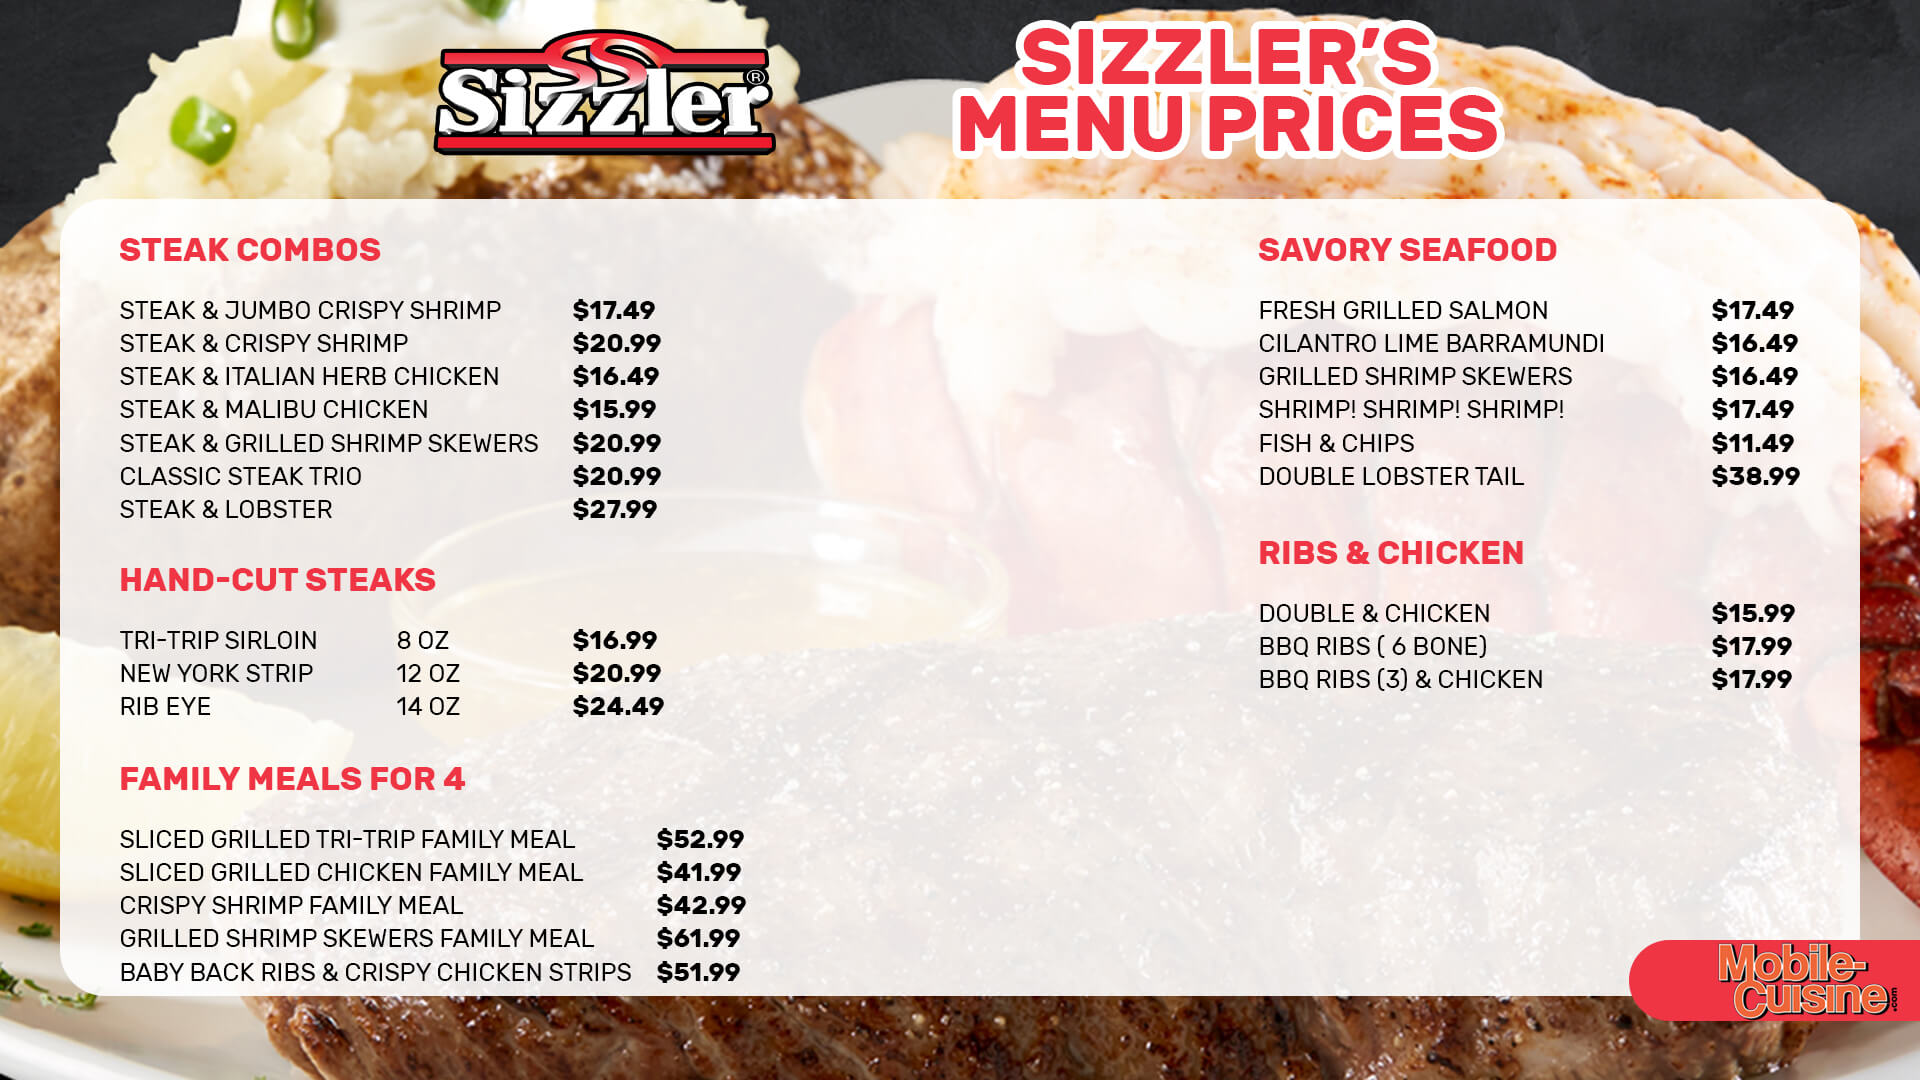 Sizzler-menu-prices